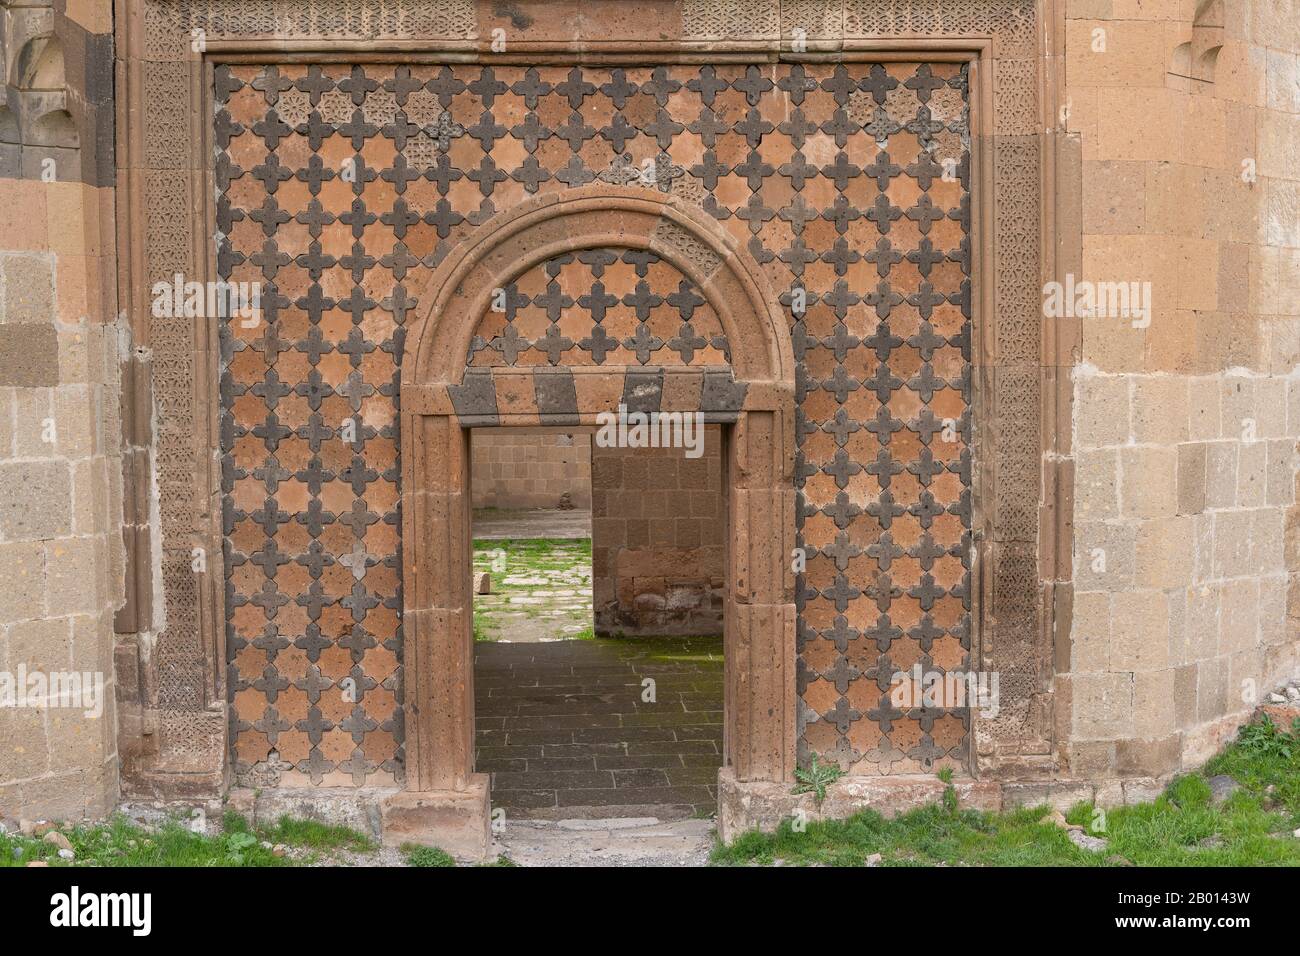 ANI, Türkei - 9. Mai 2019: Ruinen der alten Armenierstadt Ani mit dekorierter Palastentrence, Türkei. Stockfoto